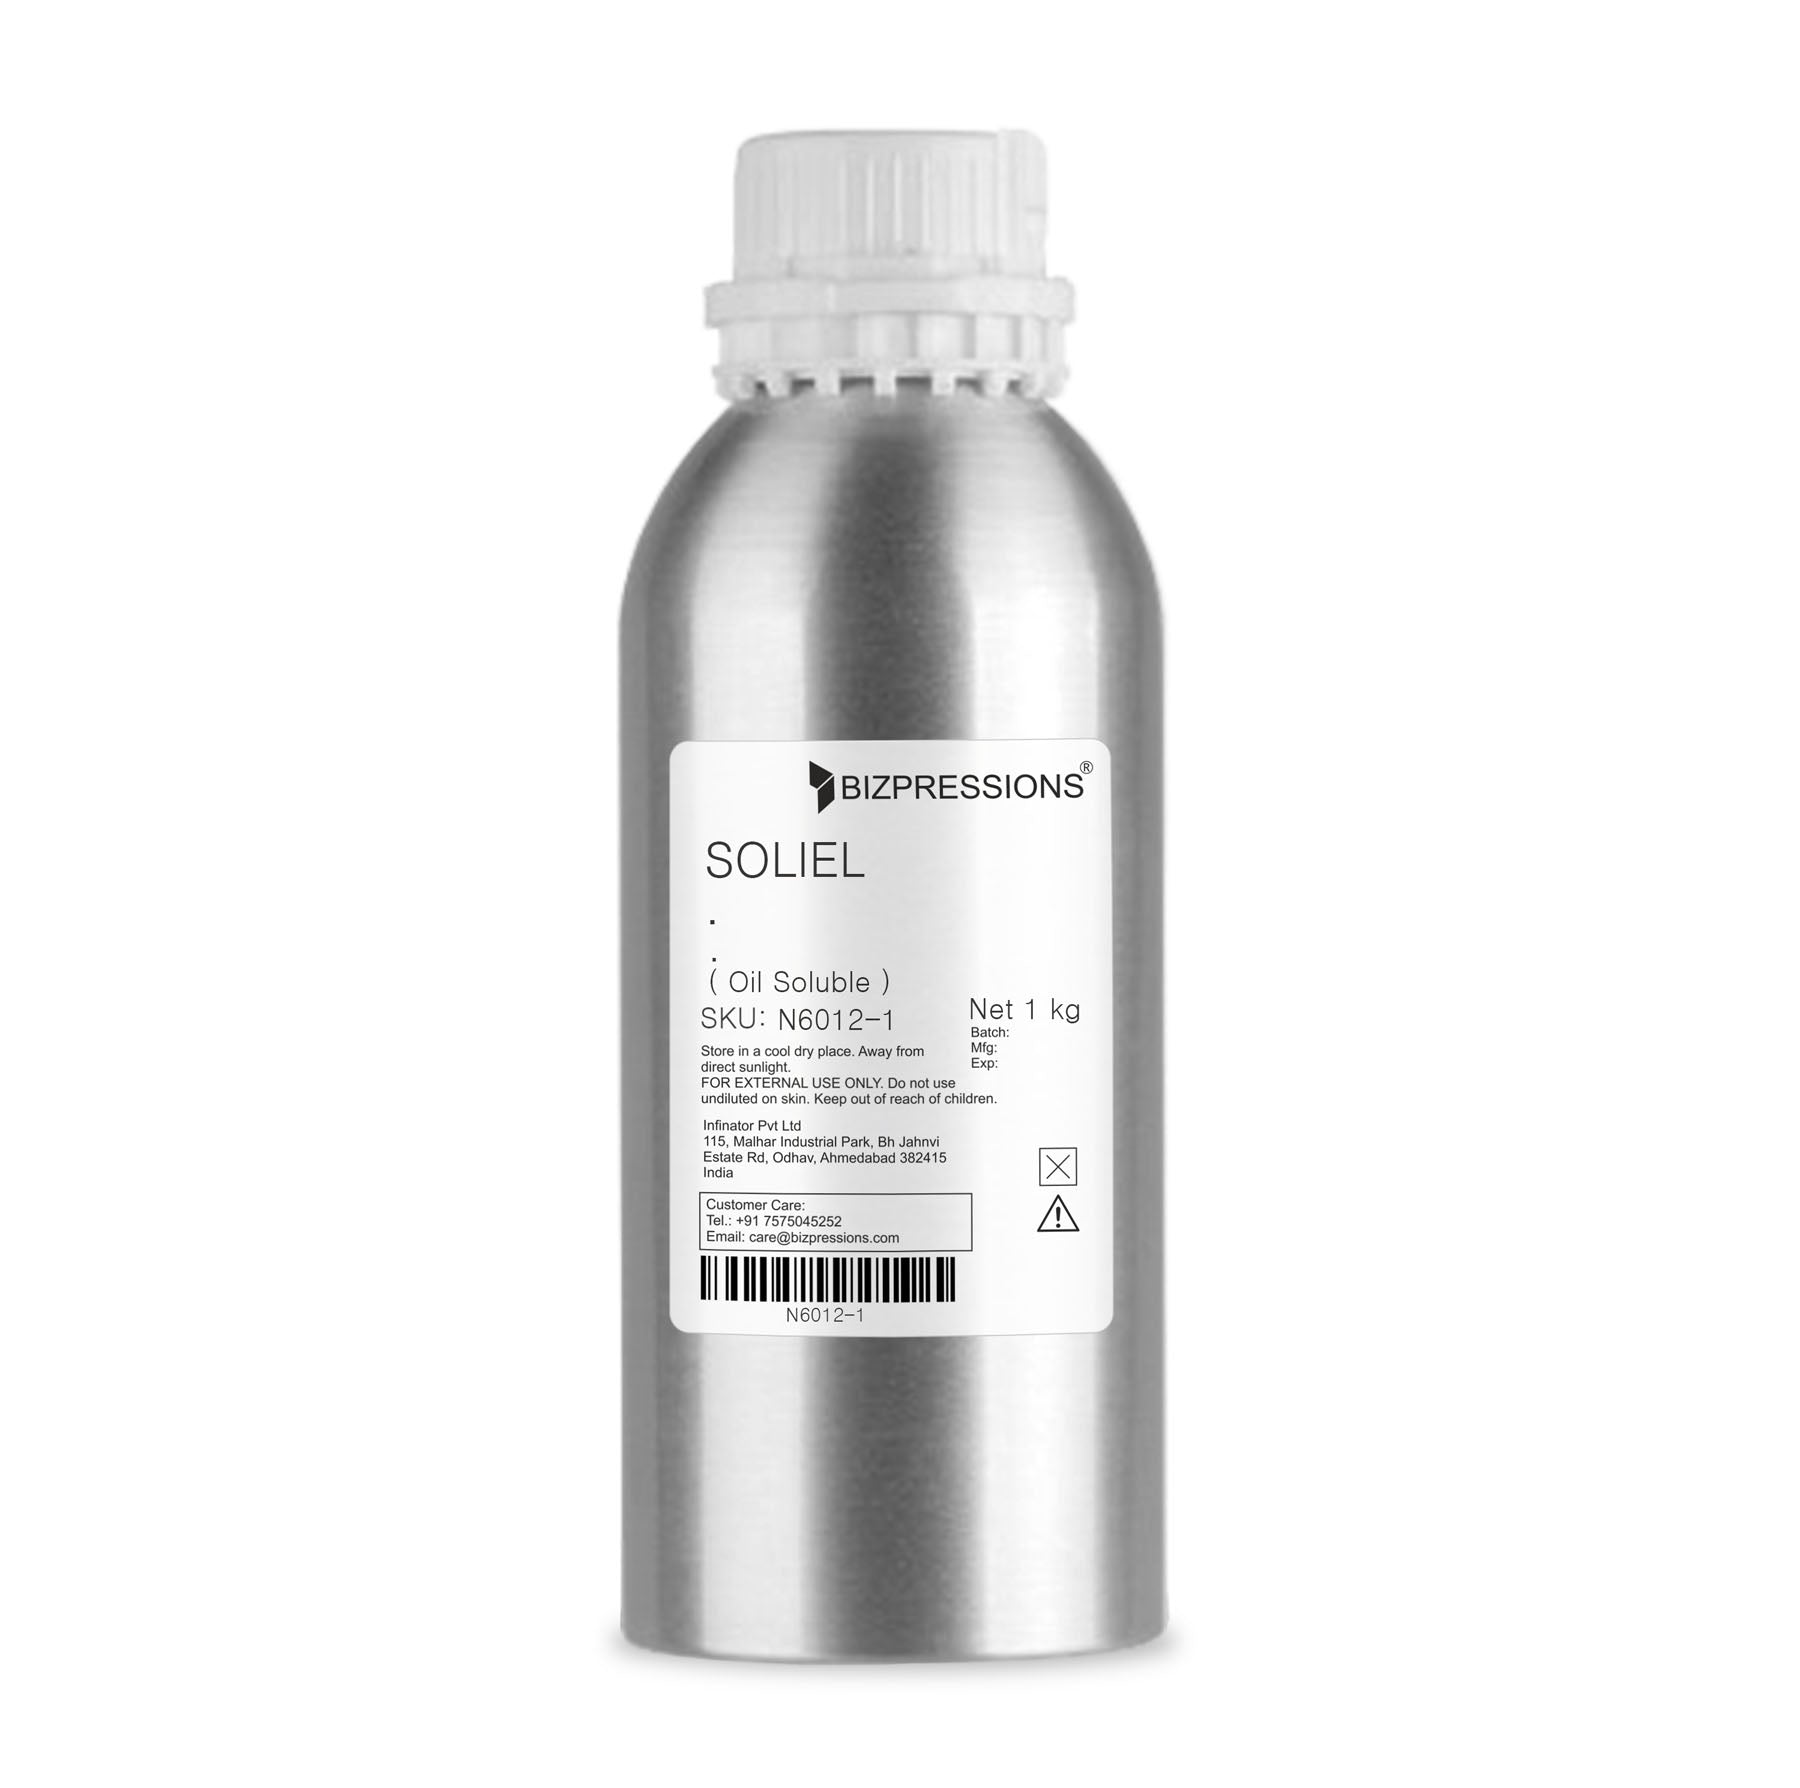 SOLIEL - Fragrance ( Oil Soluble ) - 1 kg